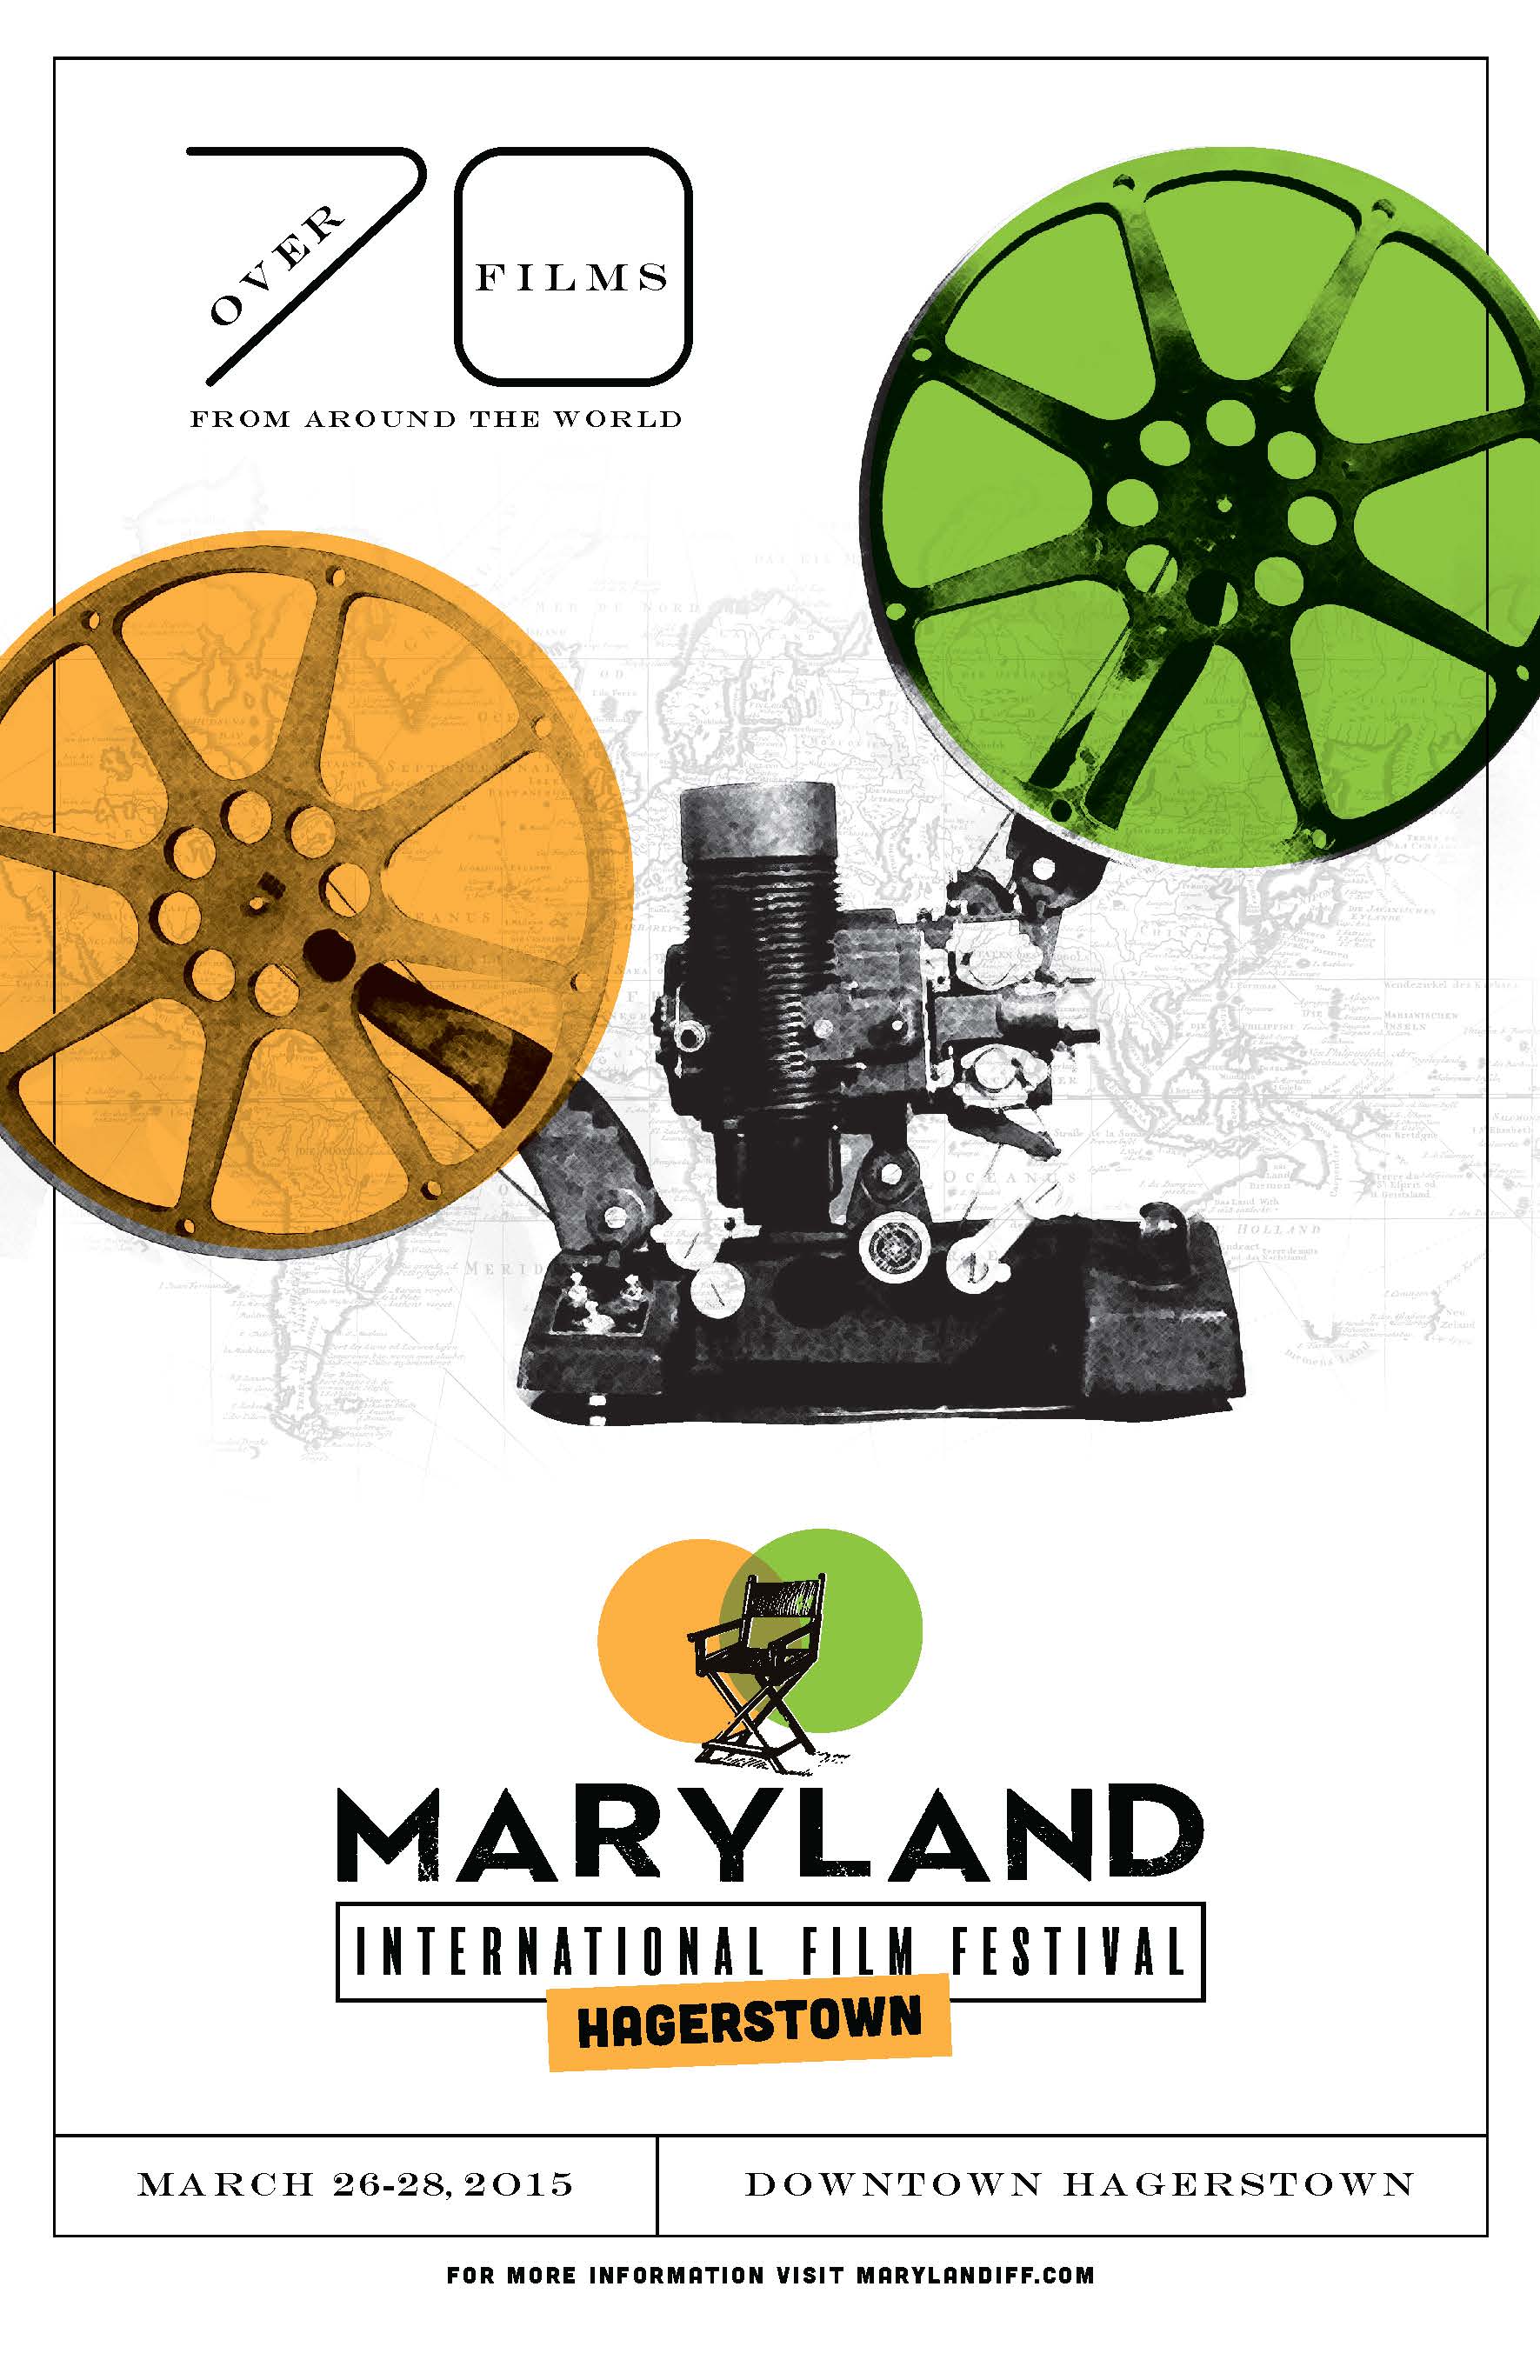 Maryland International Film FestivalHagerstown Says this Year's Fest